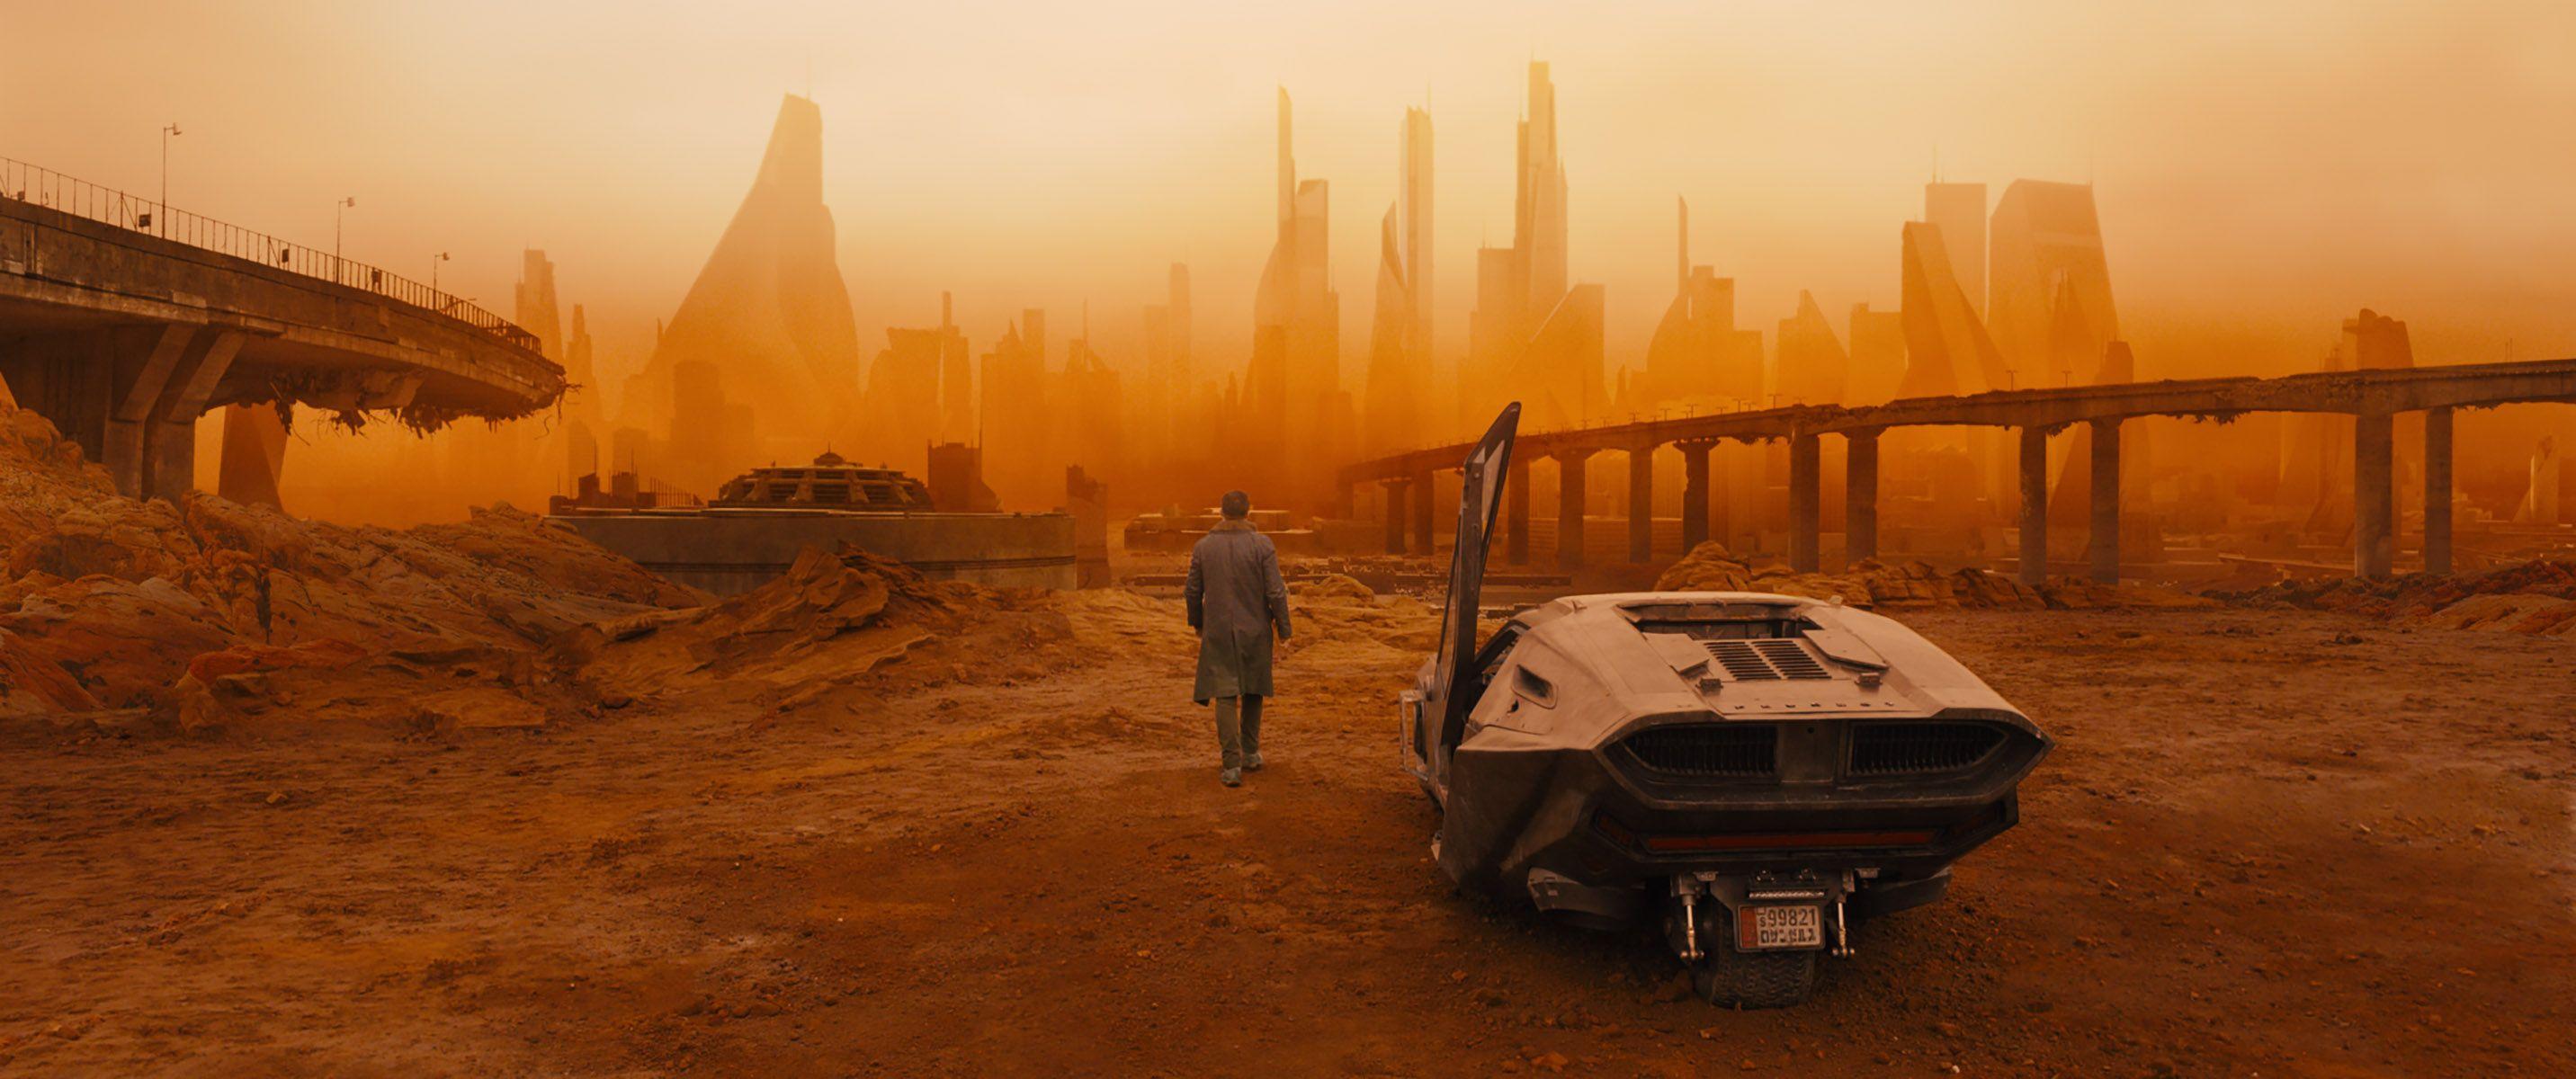 Blade Runner 2049 Image Tease Denis Villeneuve's Sci Fi Spectacle